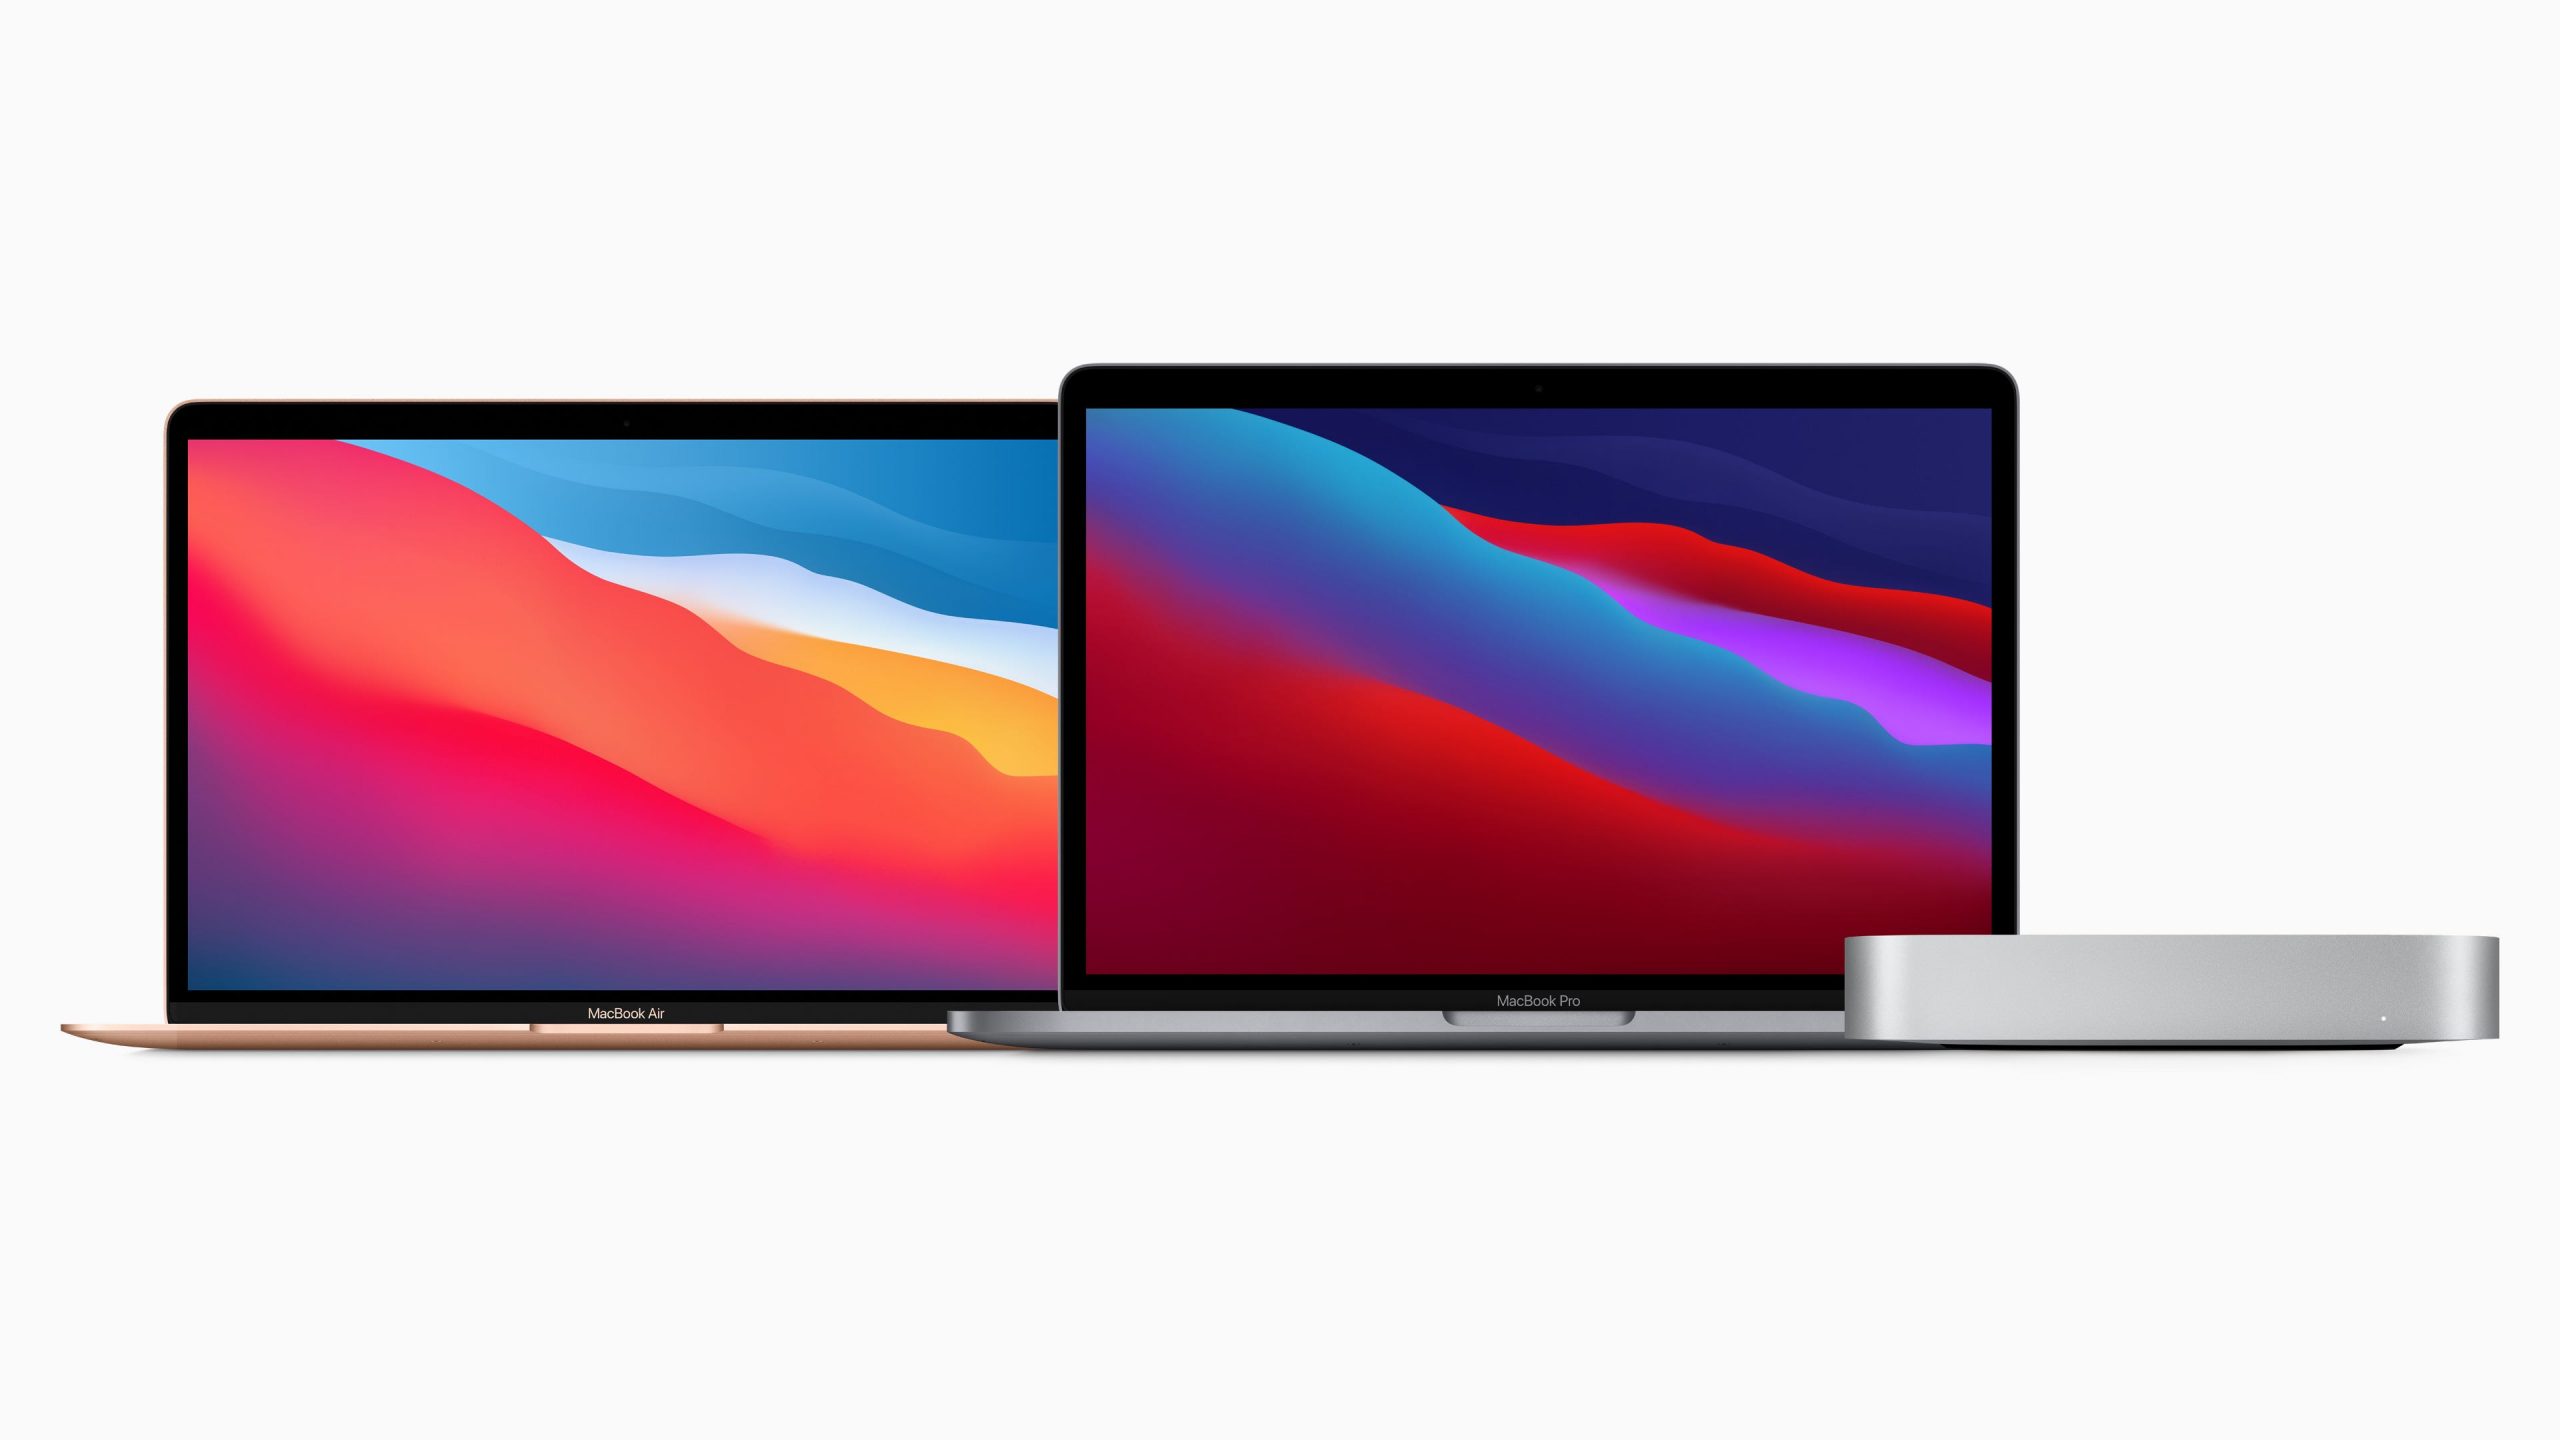 MacBook Air MacBook Pro Mac Mini 2020 M1 lineup